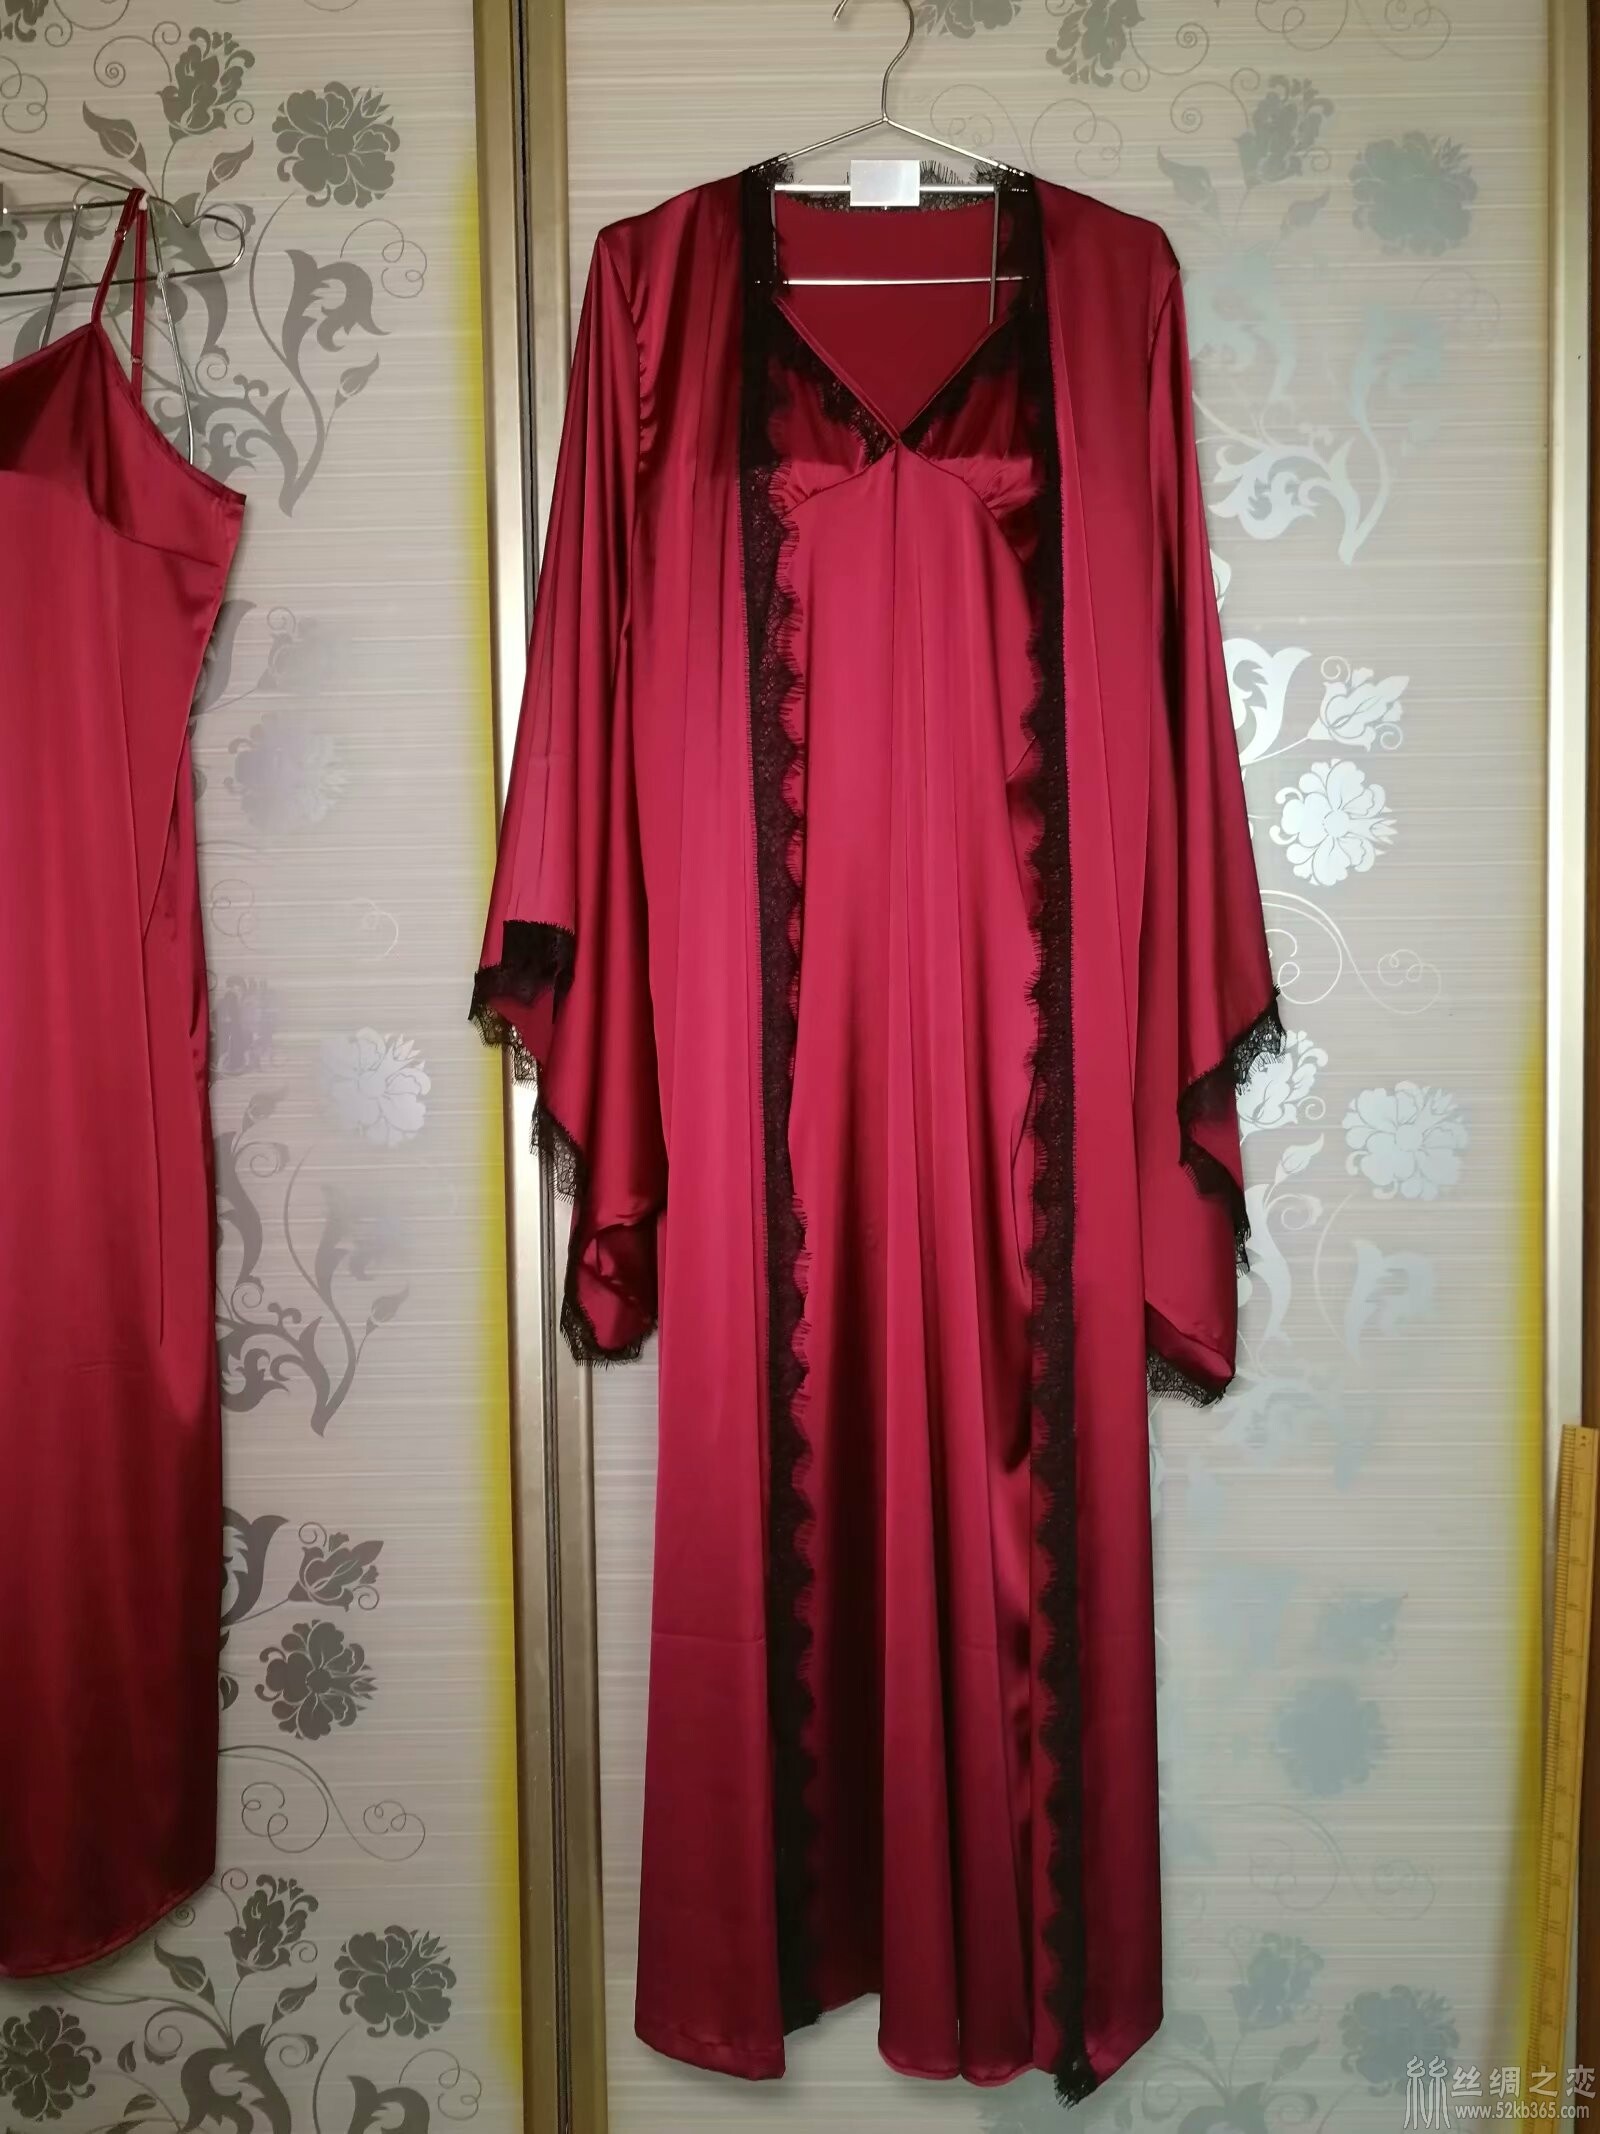 52kb 高端订制丝绸睡衣玫红两件套 Z.jpg  丝绸物品爱好者 082723oyjxsnfyfrzudmud